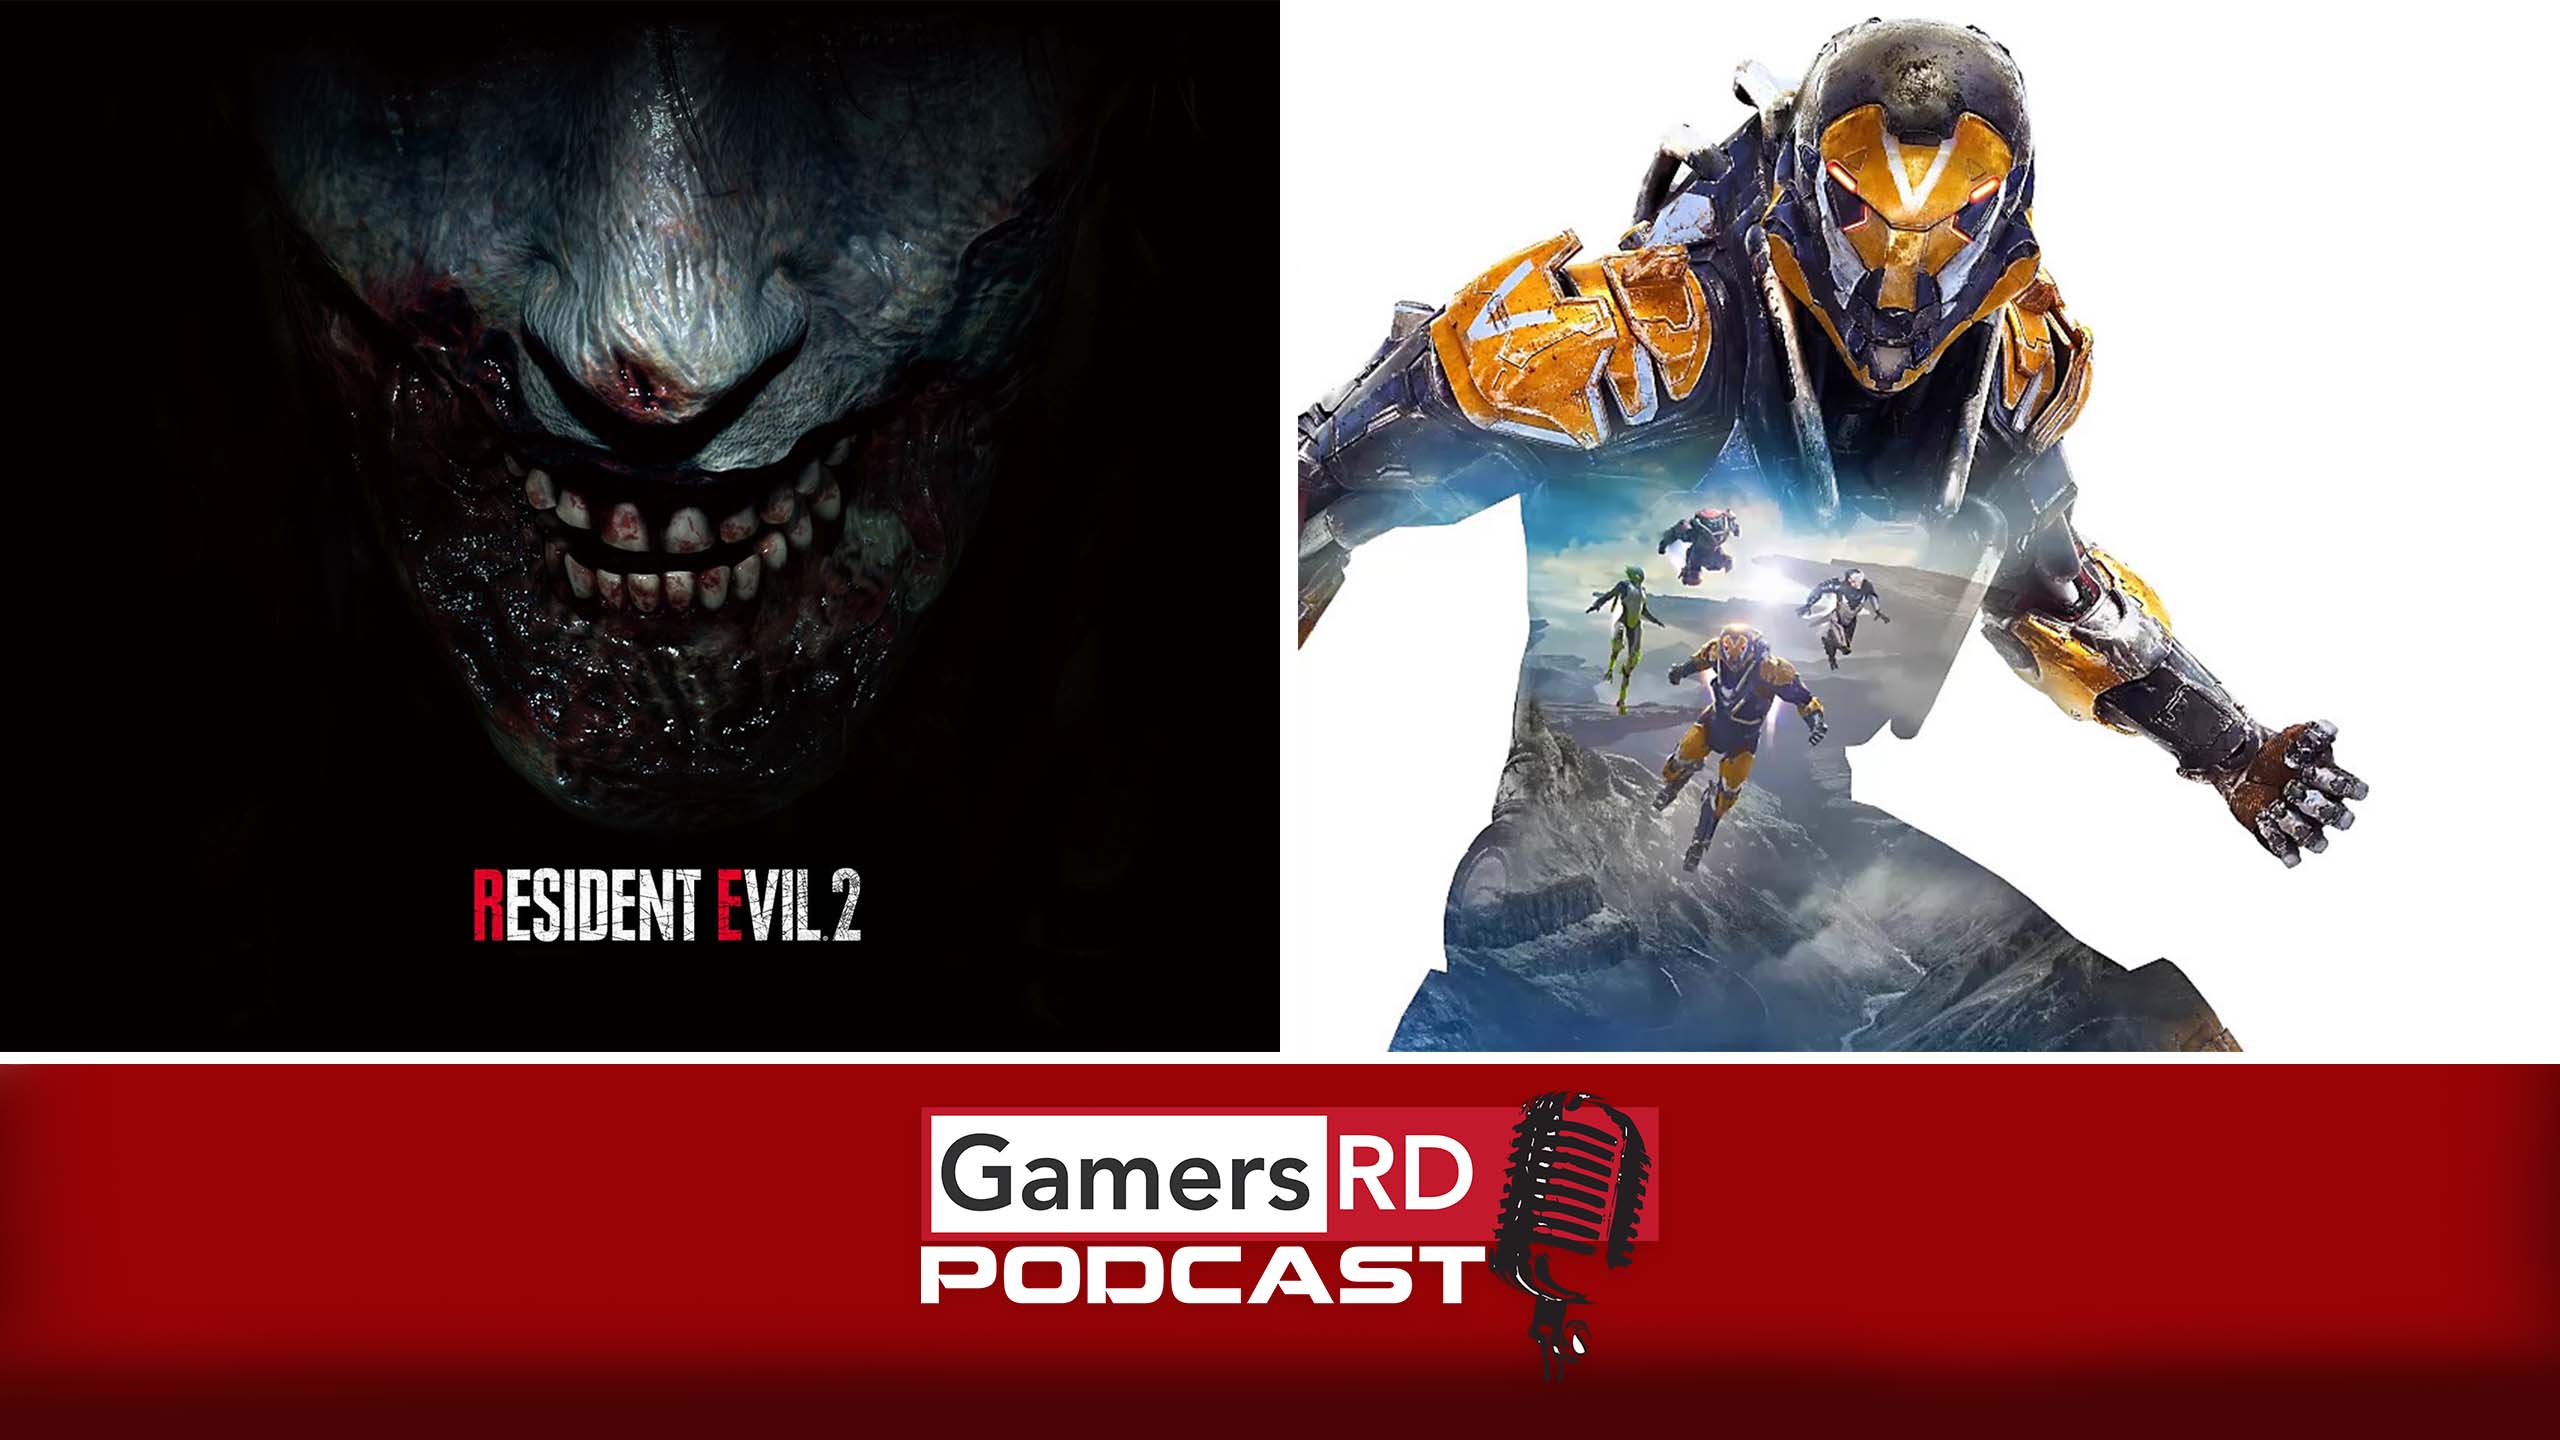 GamersRD -Podcast #51, Anthem, Resient Evil 2, Resident Evil 2 Remake, Capcom